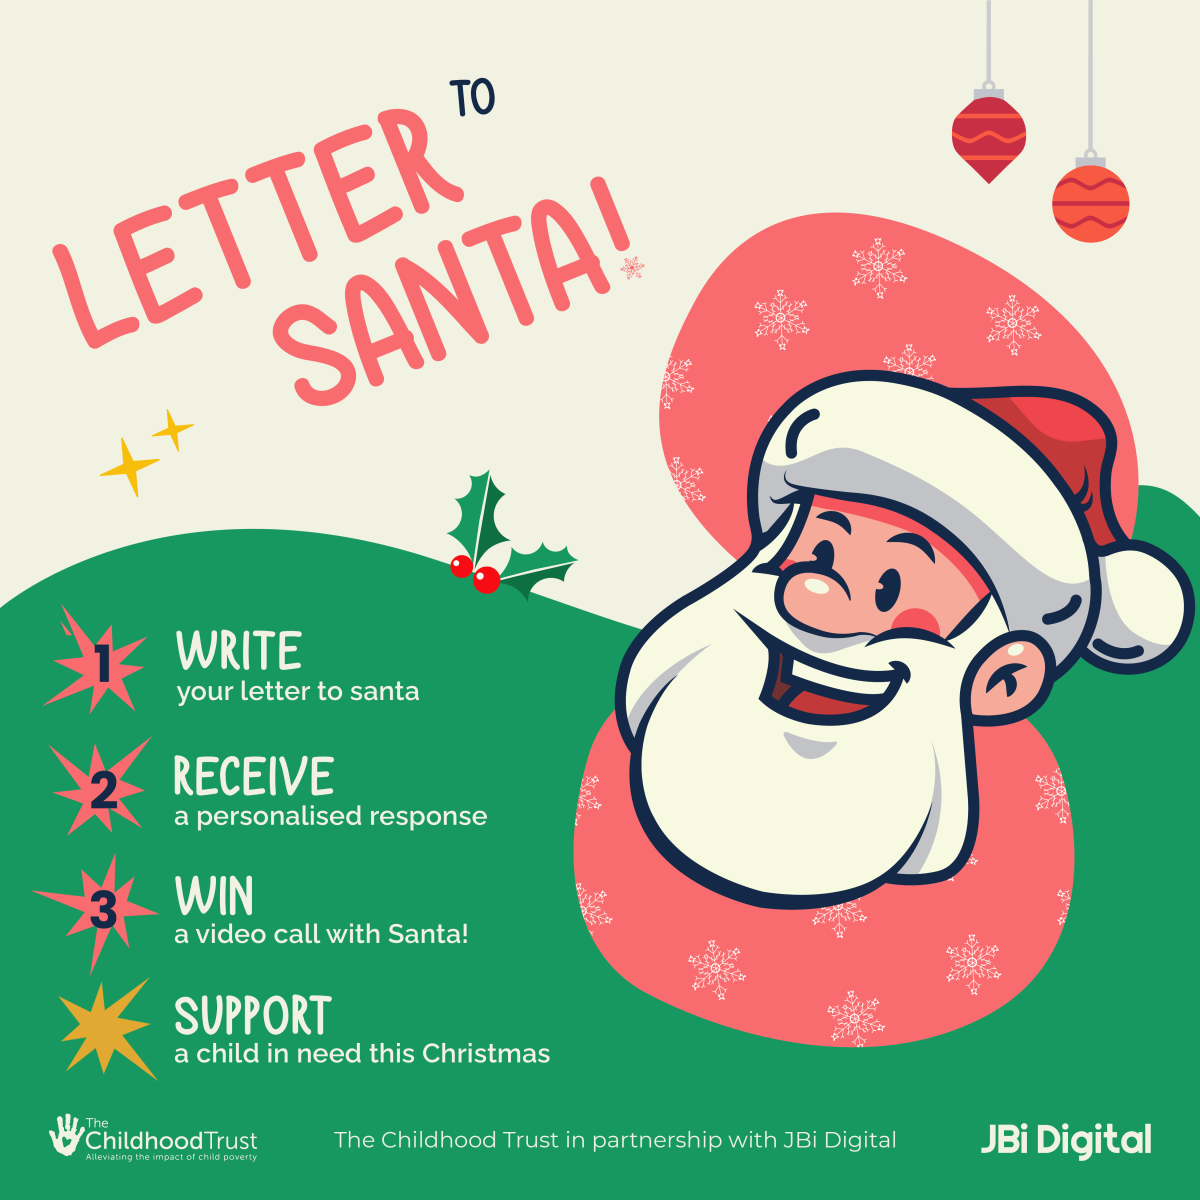 Childhood Trust - Letter to Santa Instagram Share Image